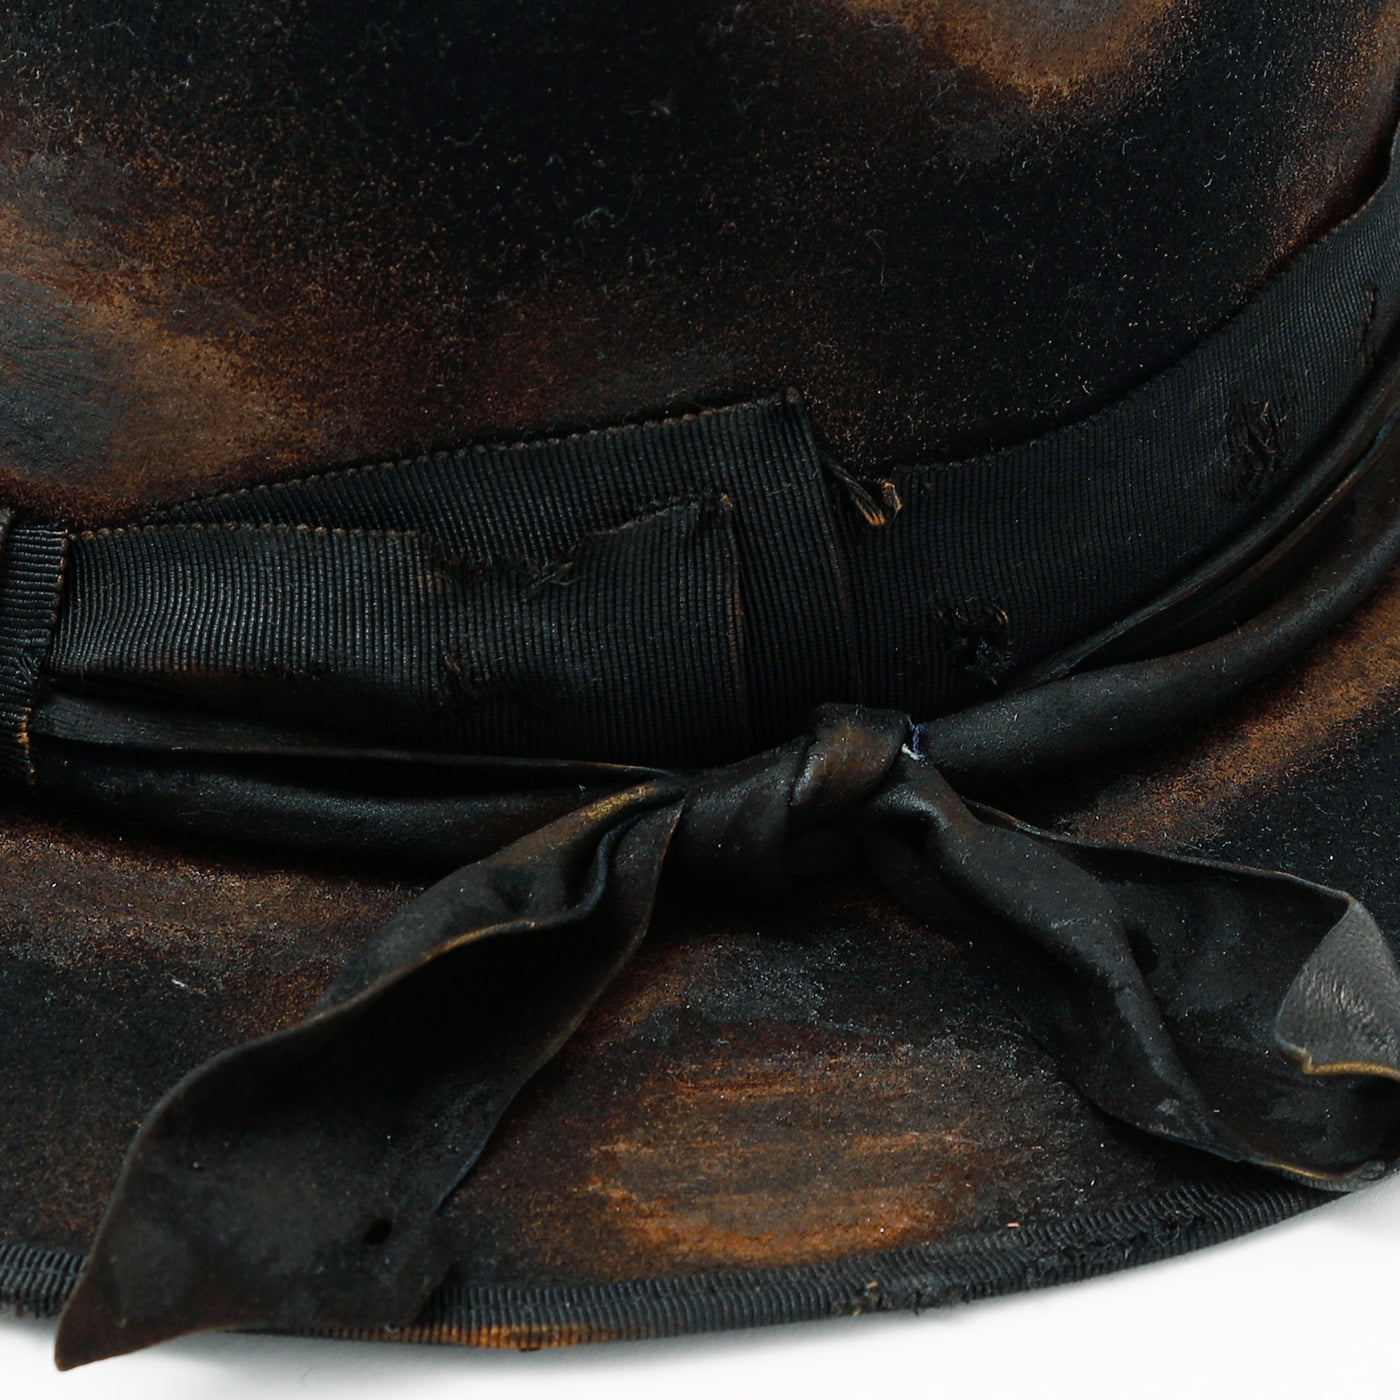 Spot Burned Black Hat / BLACK